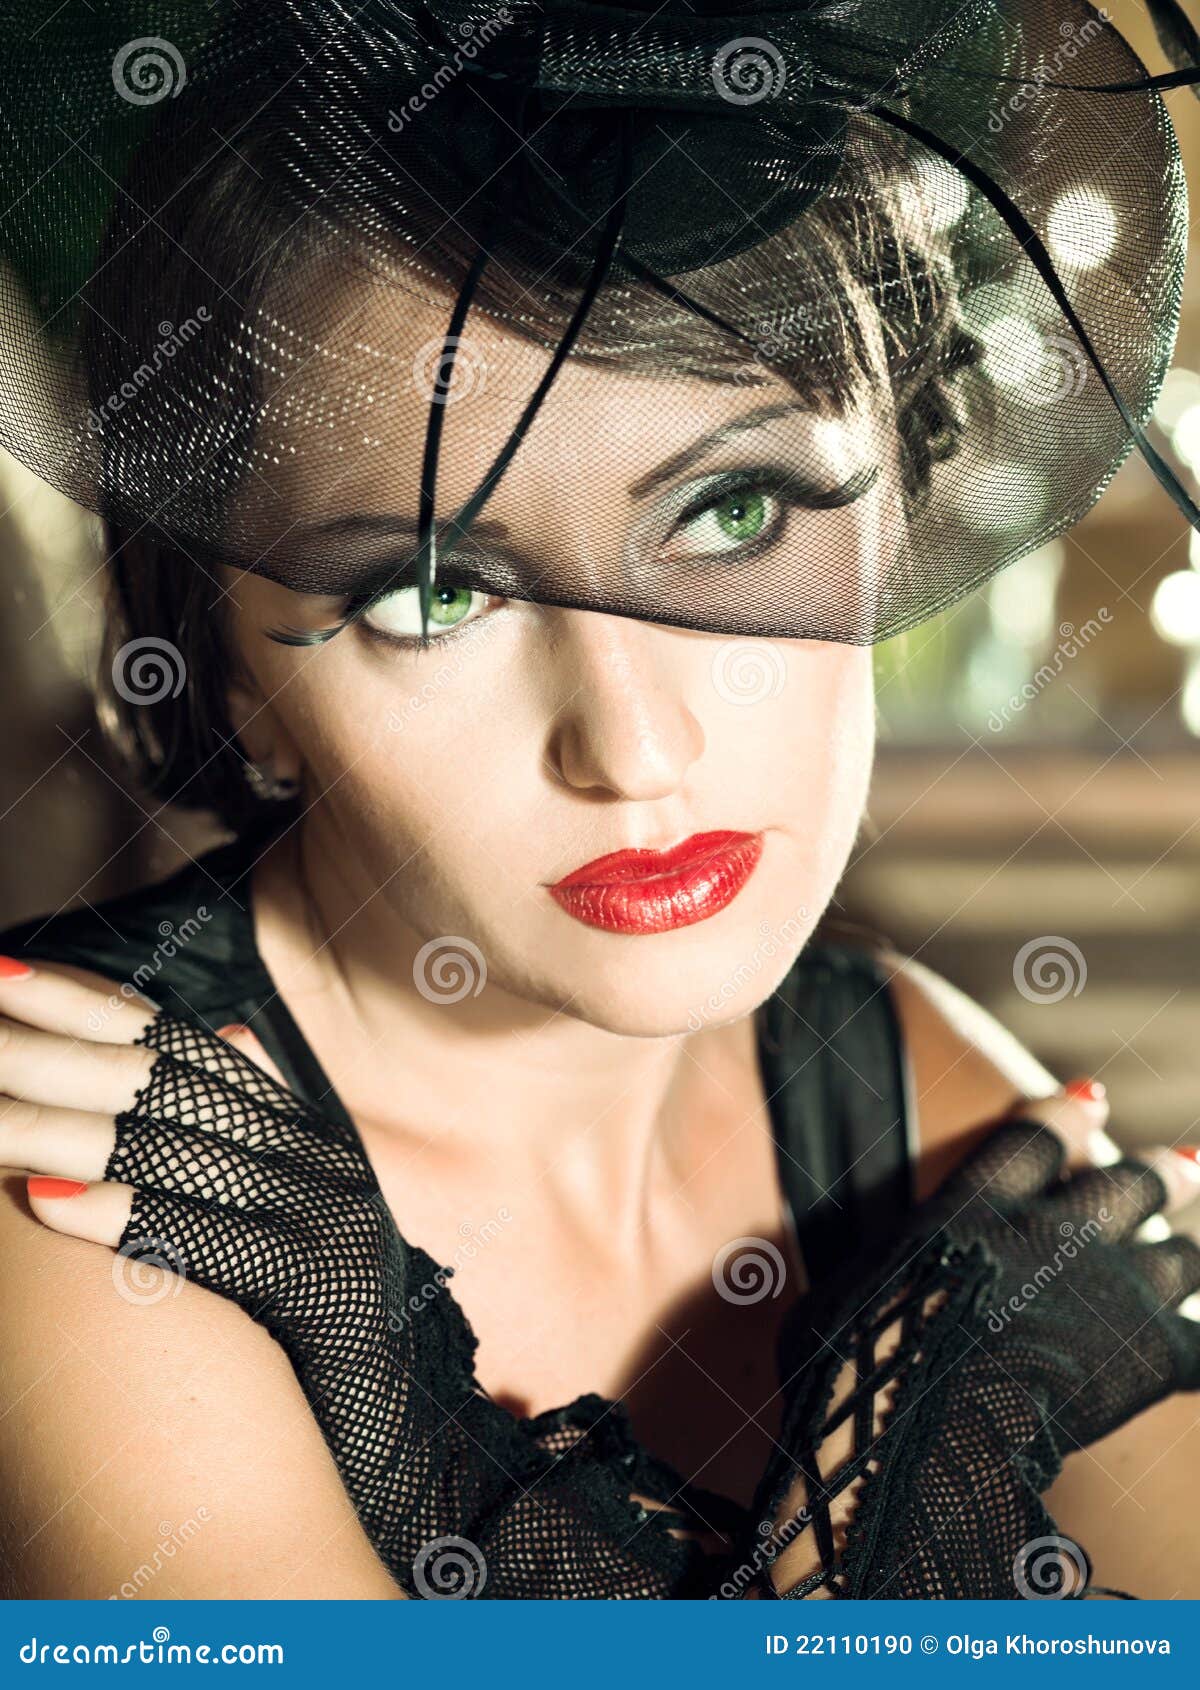 Retro woman stock photo. Image of glamour, restaurant - 22110190